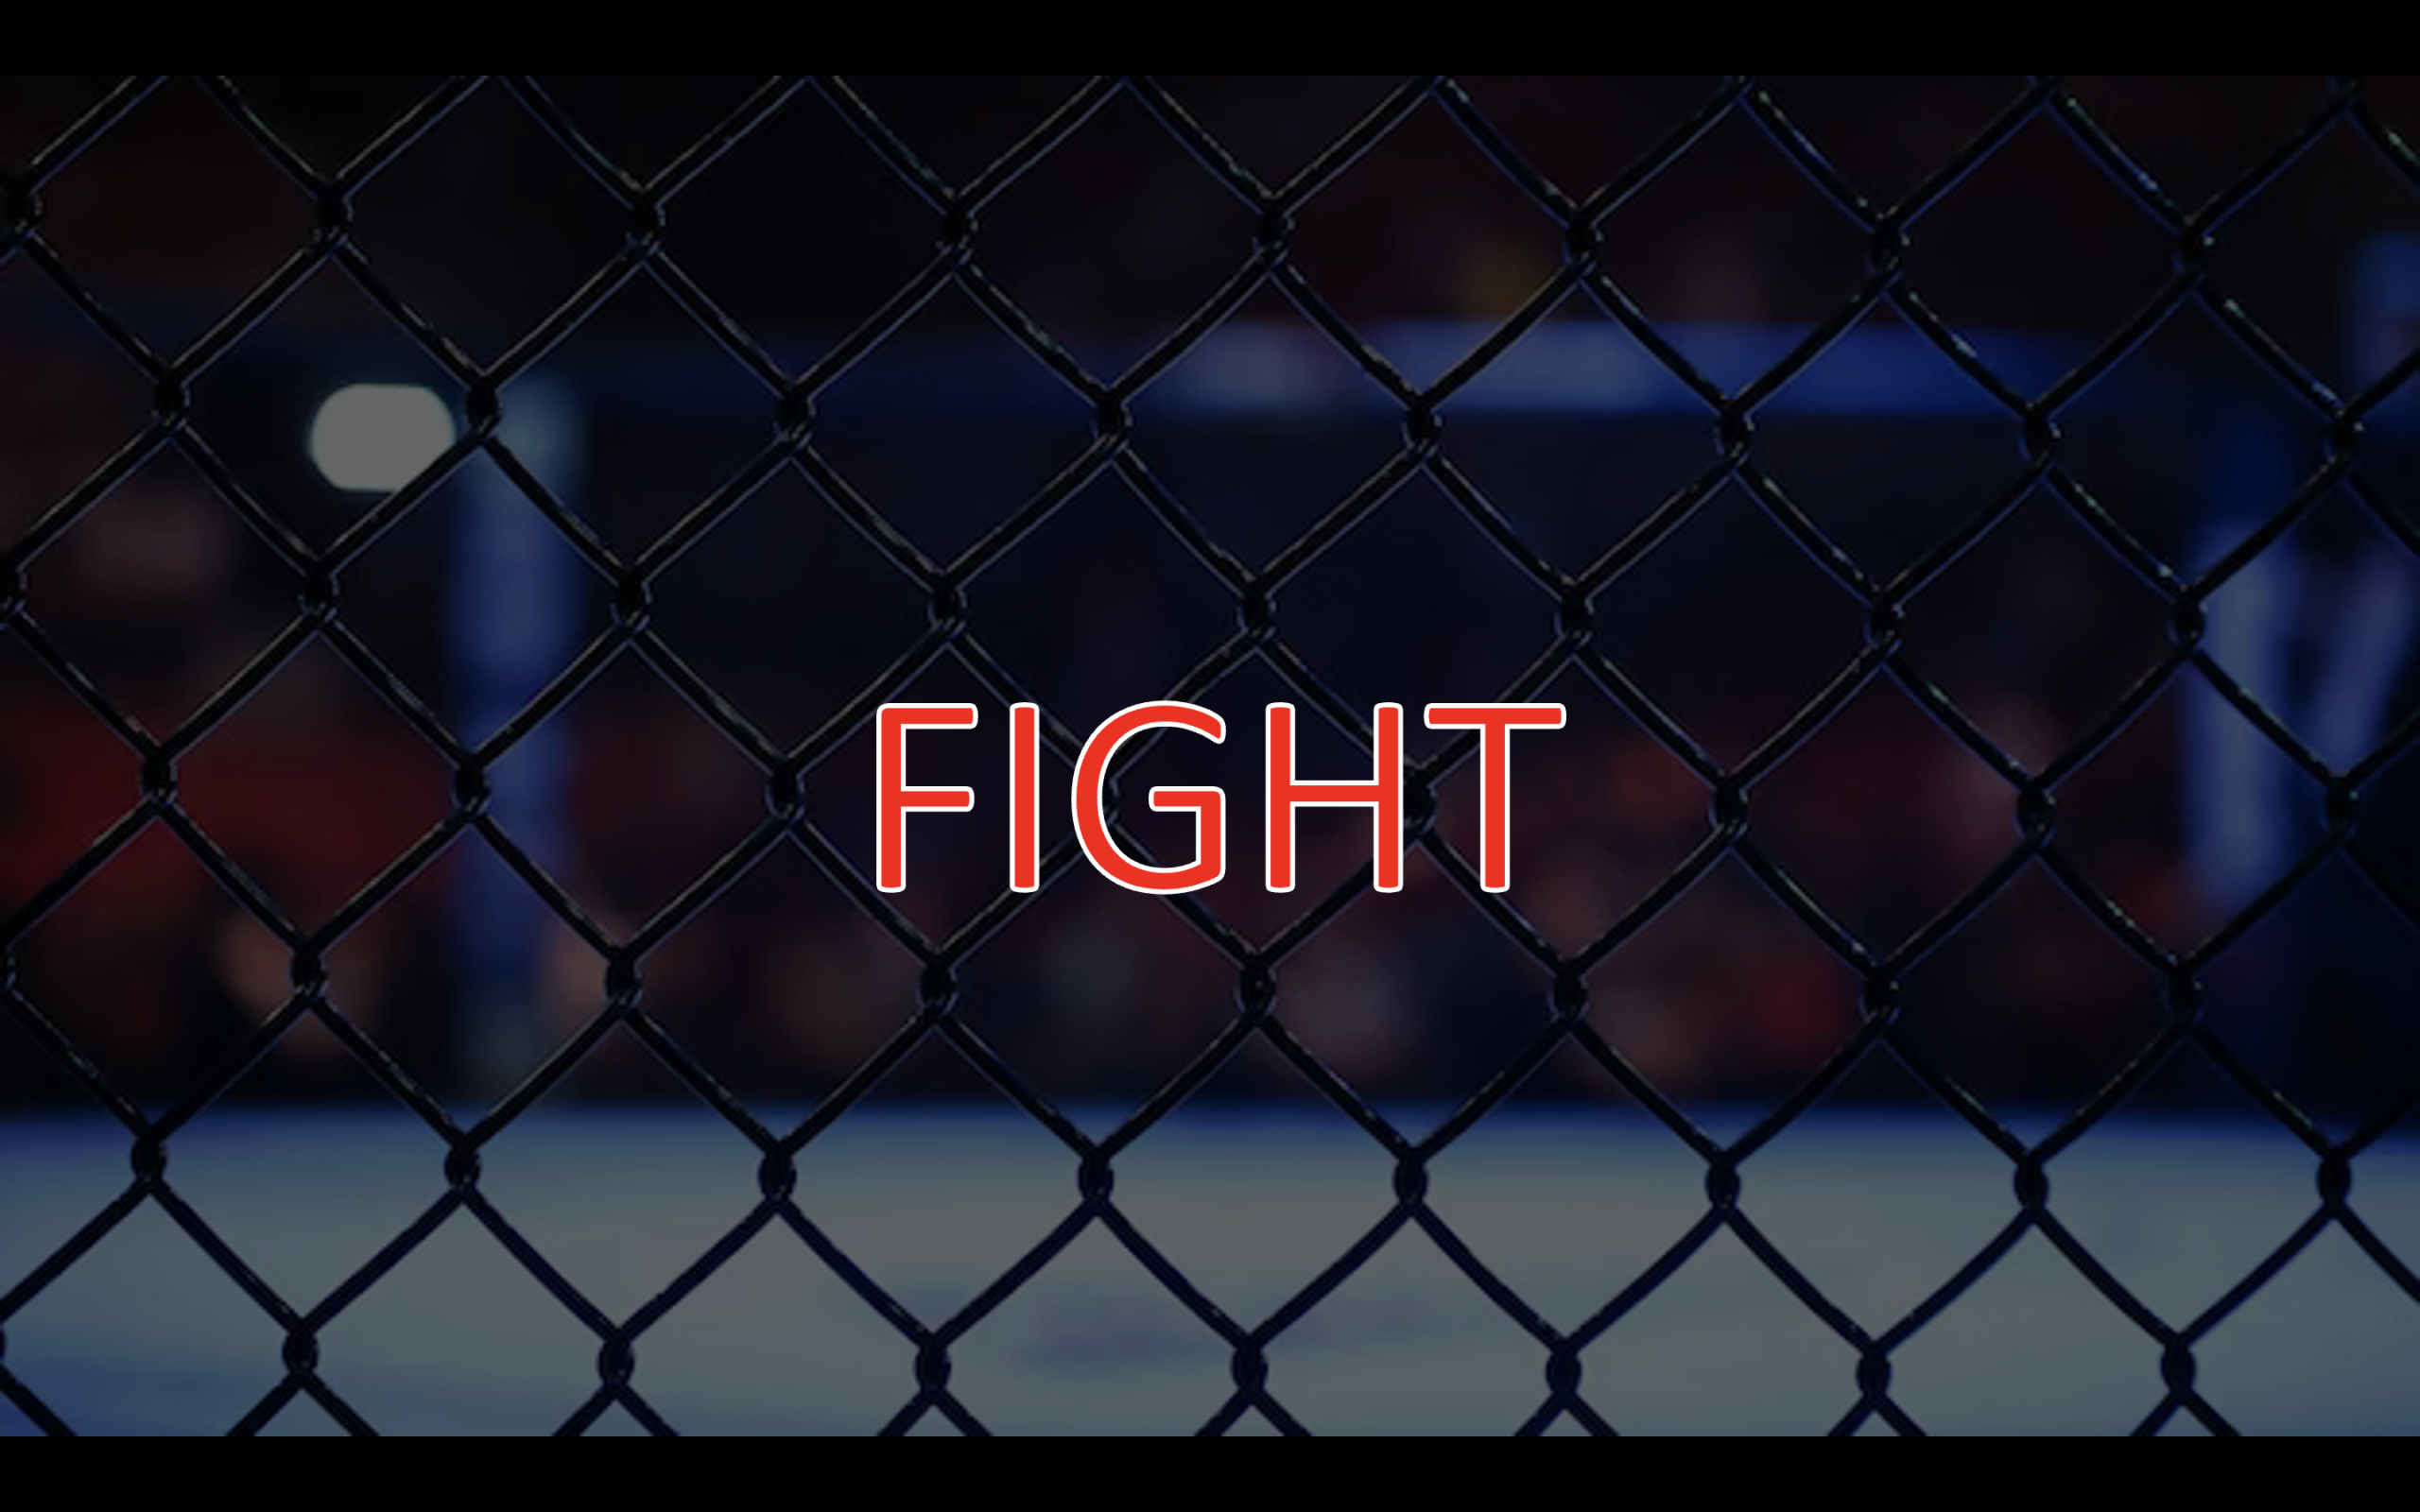 FIGHT: Life